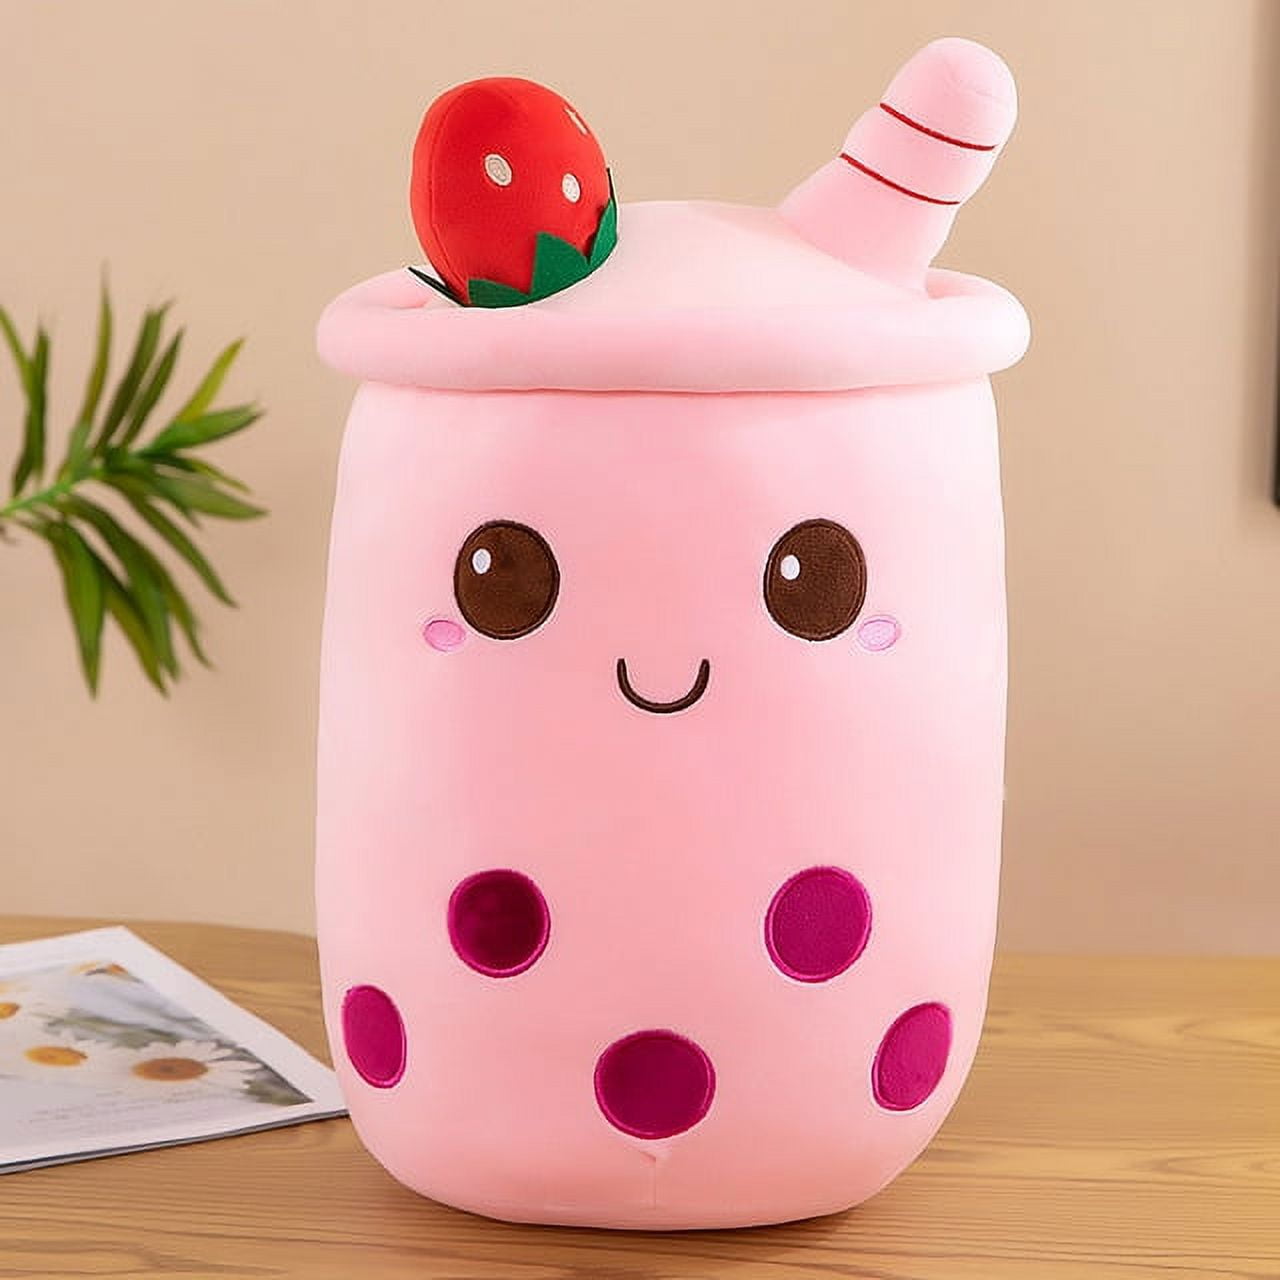 Cute Plush Boba Milk Tea Stuffed Teacup Pillow Soft Bubble Tea Cup Plushie  Toy Kawaii Cartoon Gift for Kids Home Decor Strawberry,50CM 